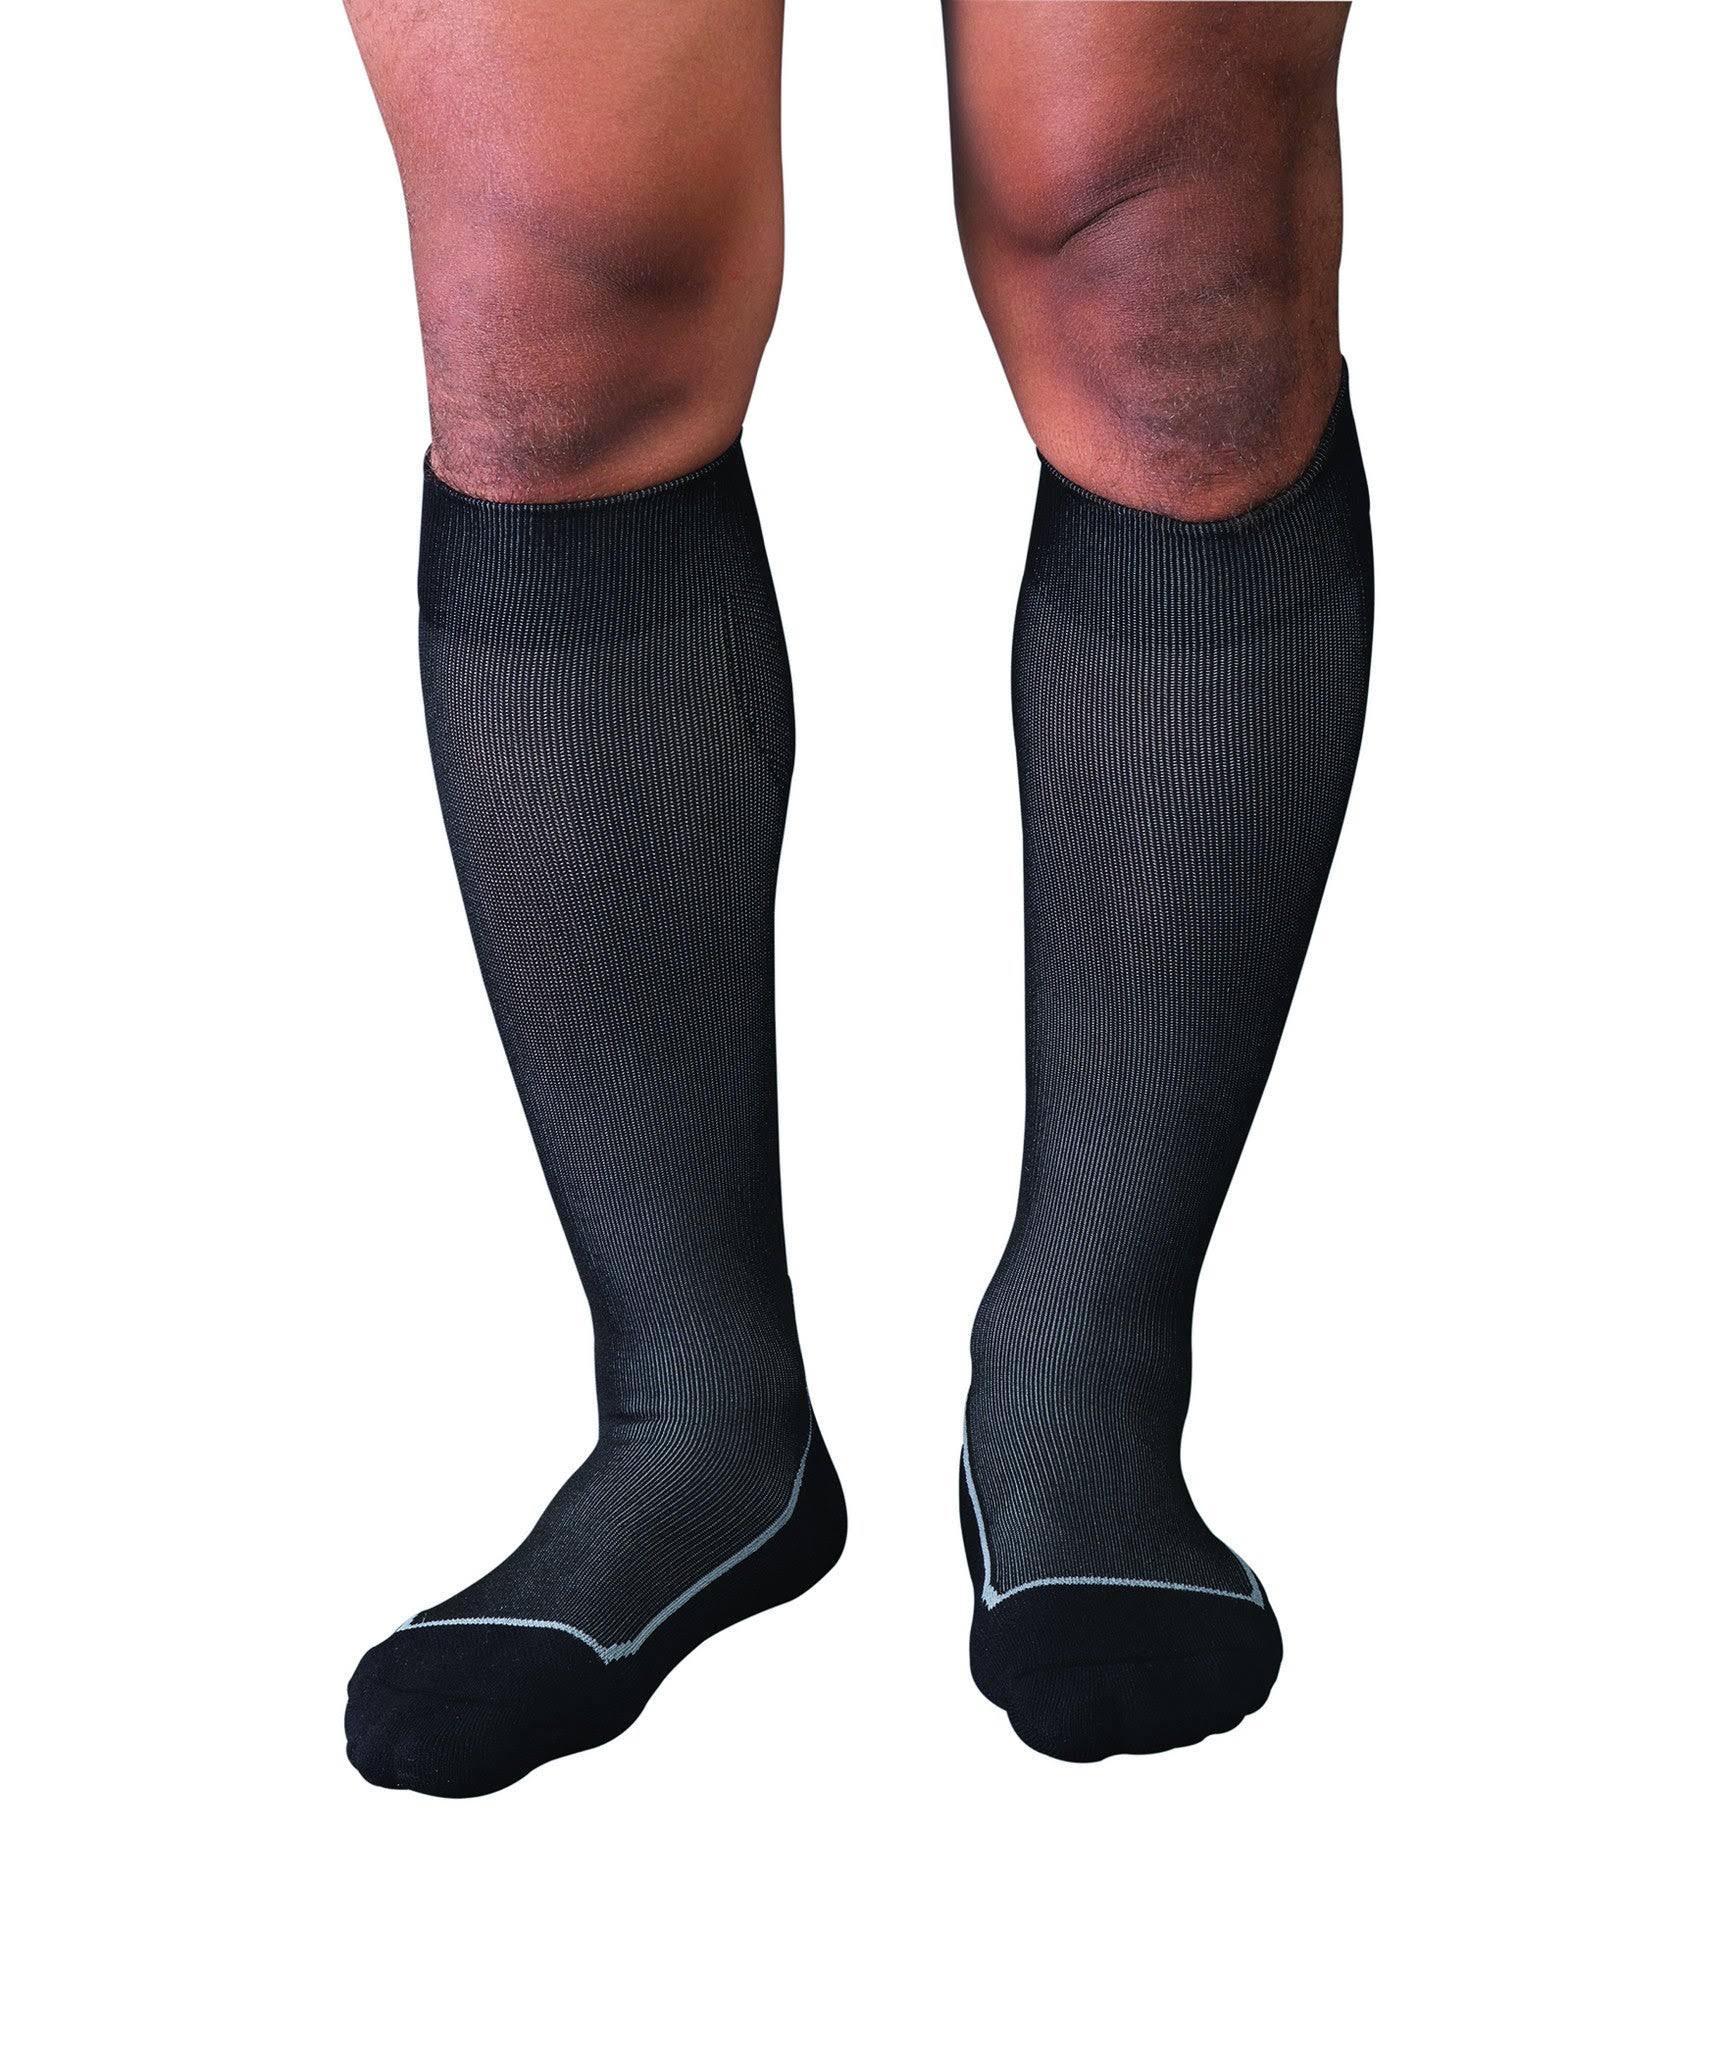 JOBST Sport Knee High 20-30 mmHg Compression Socks Black/Cool Black Large